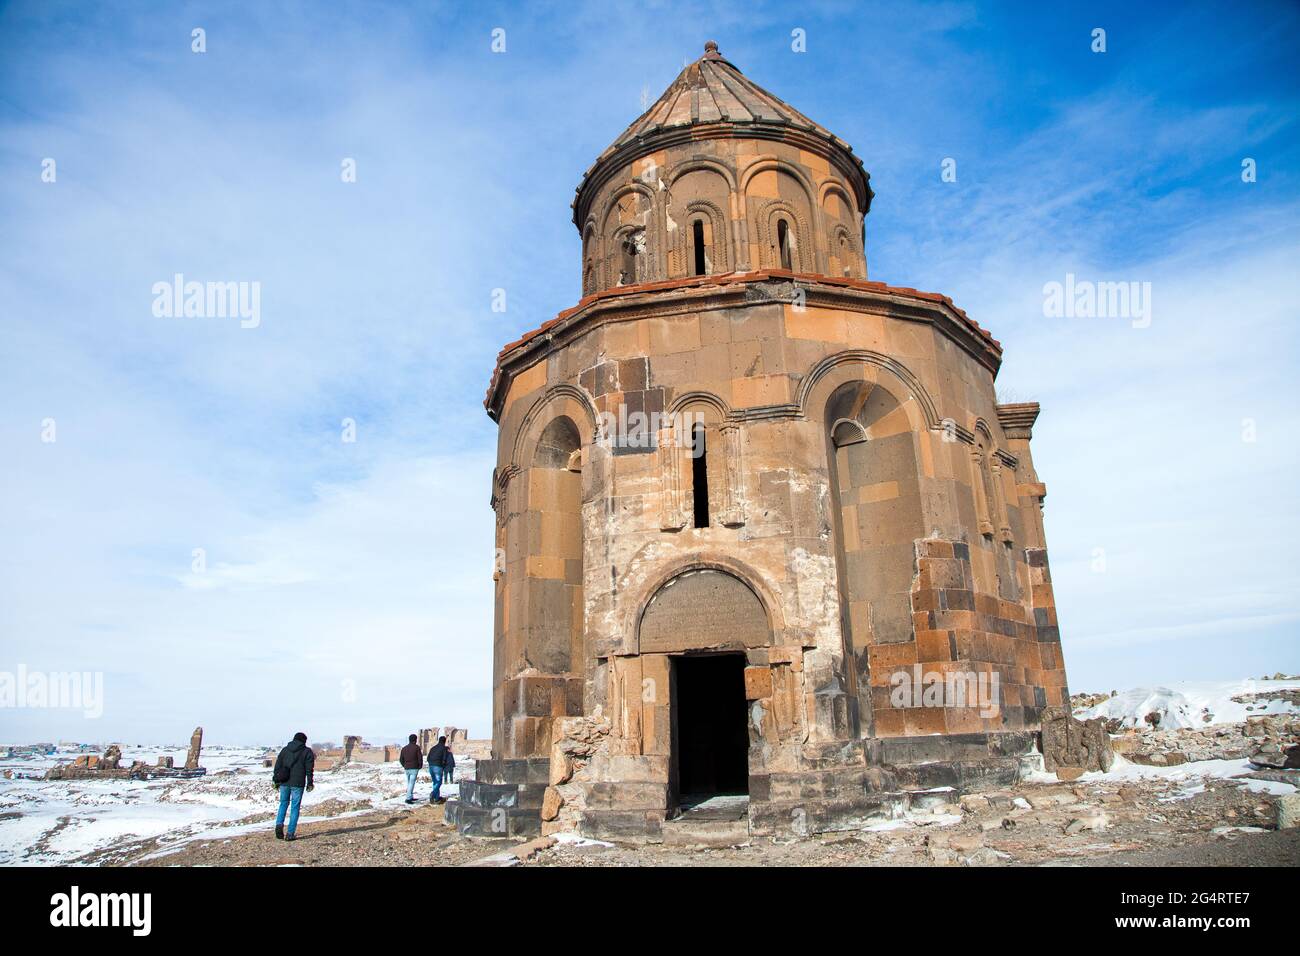 Kars,Turchia - 01/28/2016: Rovine ANI, Ani è una città armena medievale in rovina e disabitata situata nella provincia turca di Kars Foto Stock